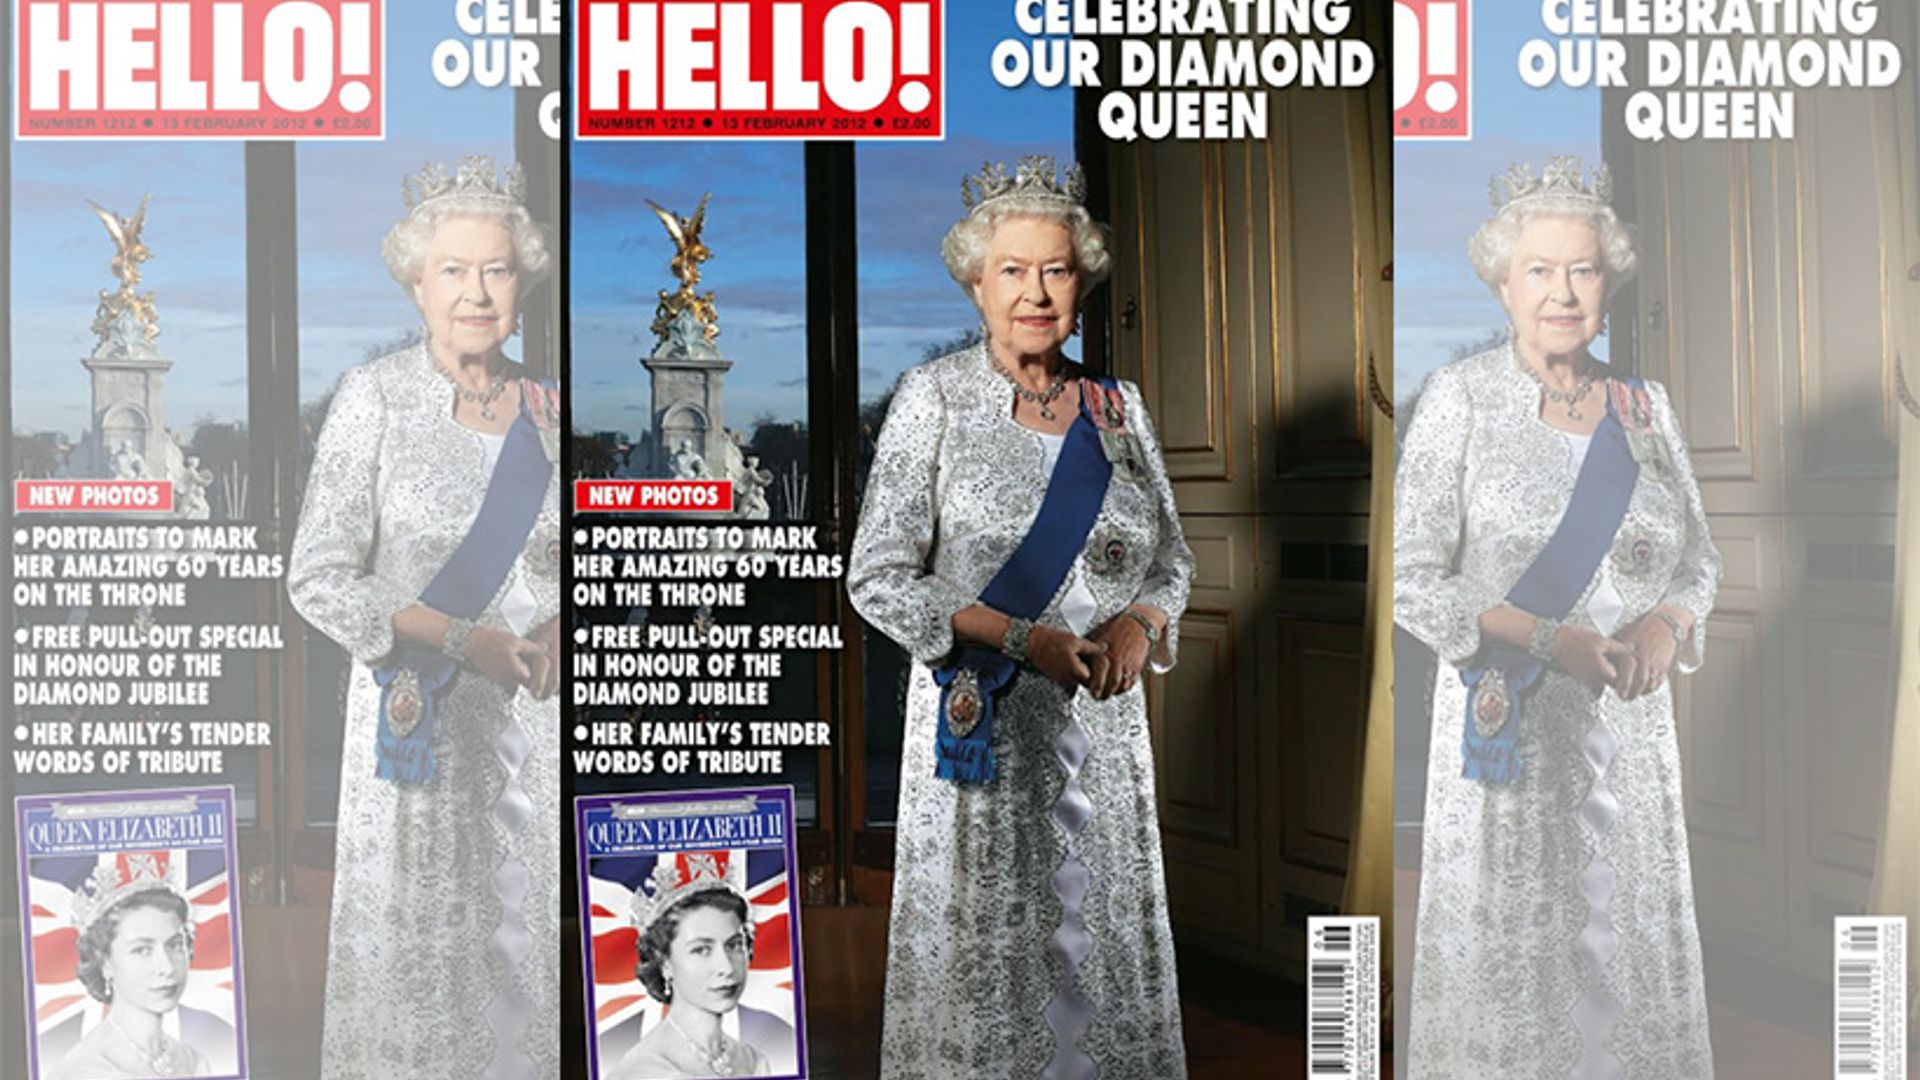 https://www.hellomagazine.com/imagenes/royalty/2018020946109/the-queen-diamond-jubilee-flashback-friday/0-231-784/the-queen-diamond-t.jpg}